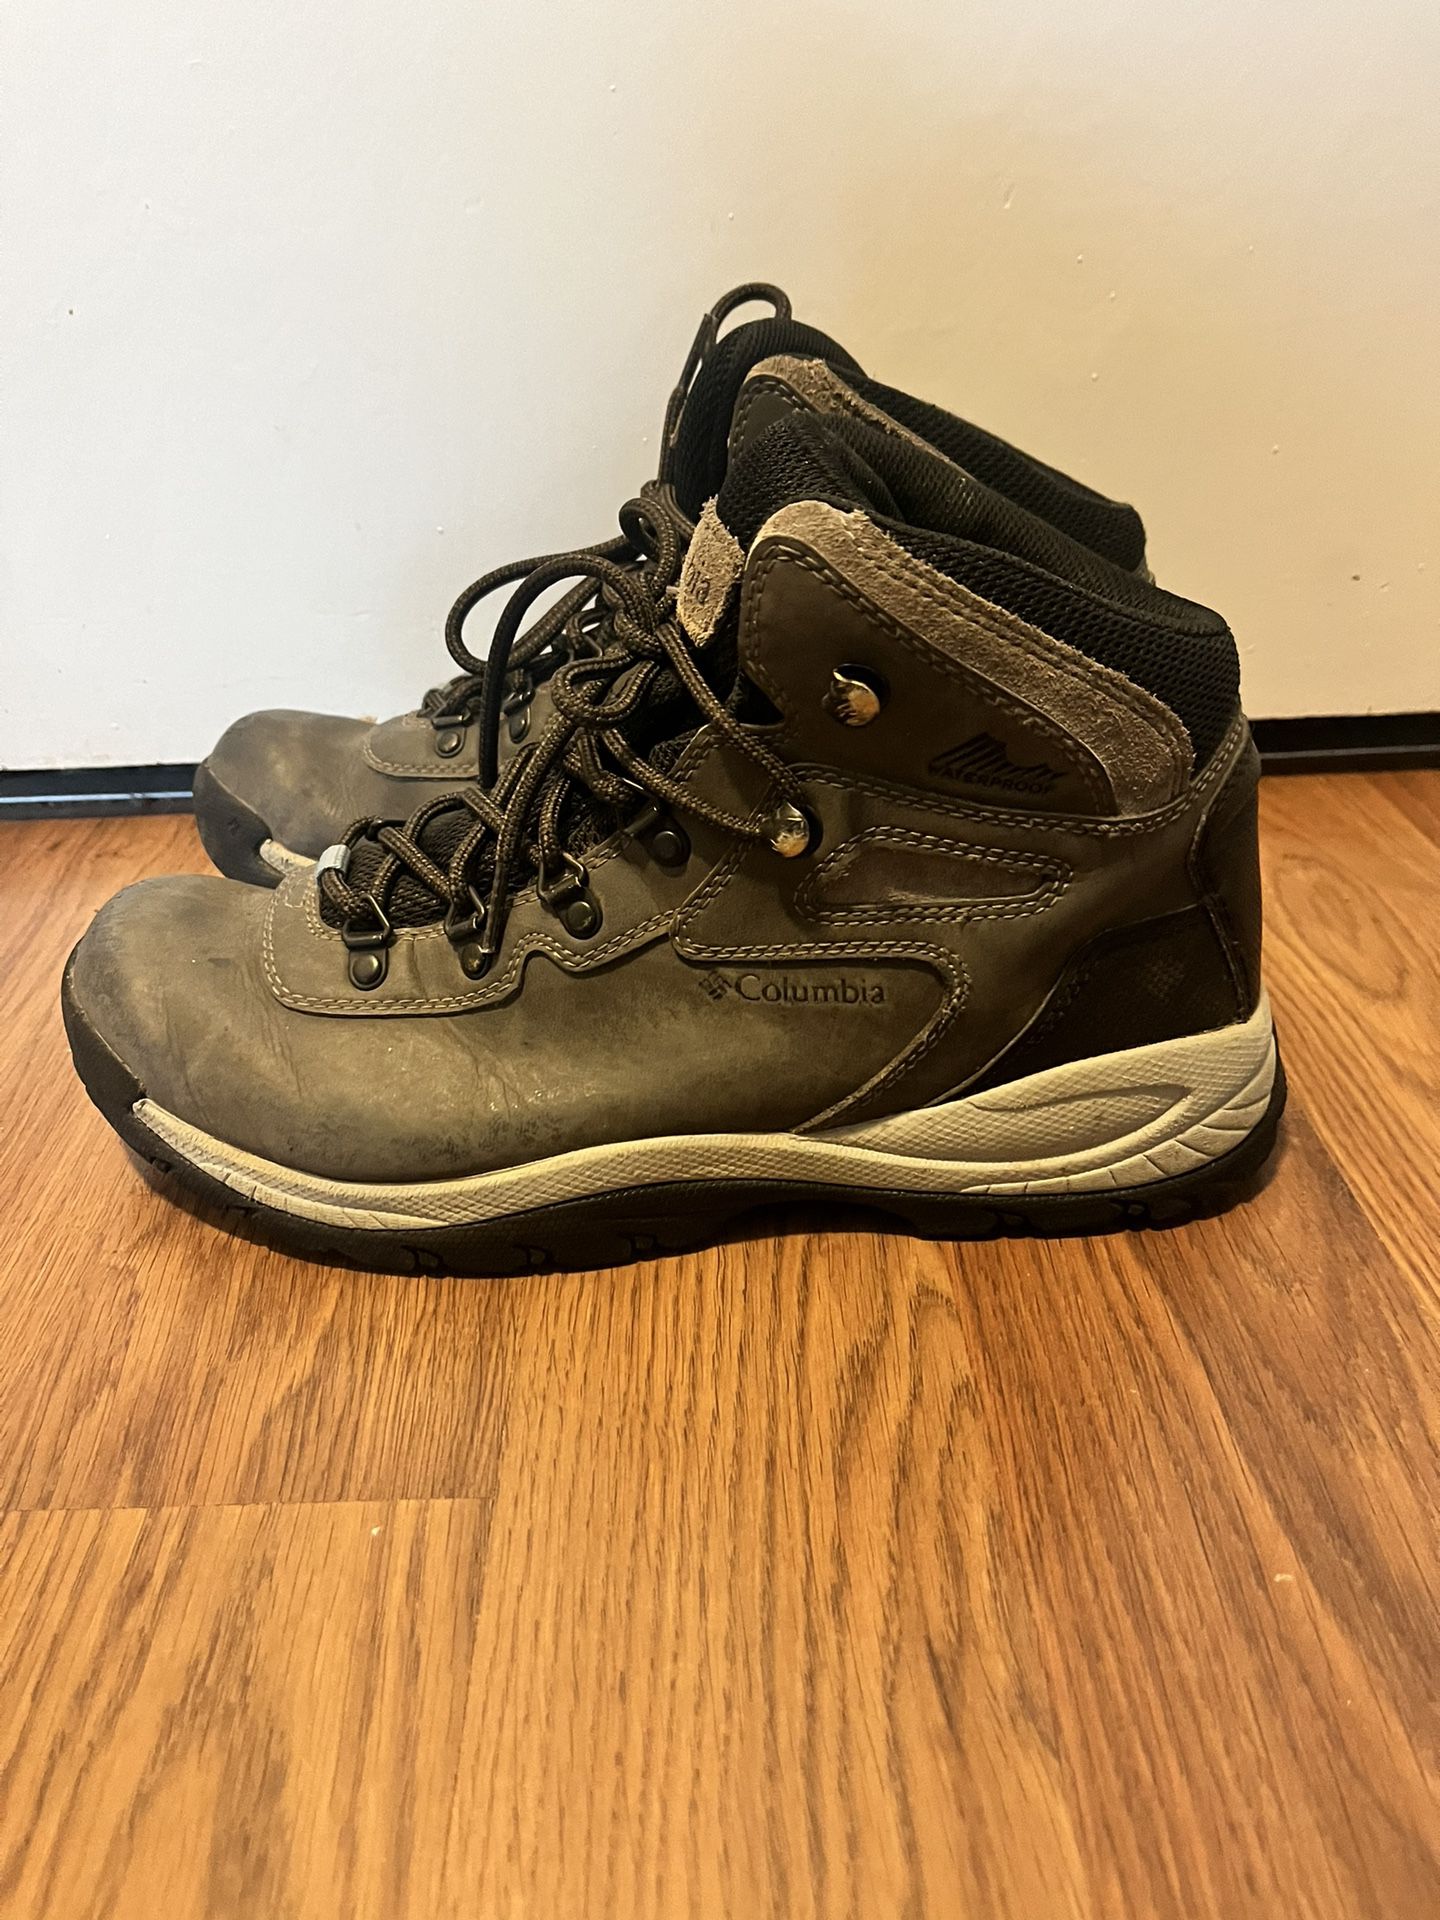 Women’s Columbia Hiking Boots